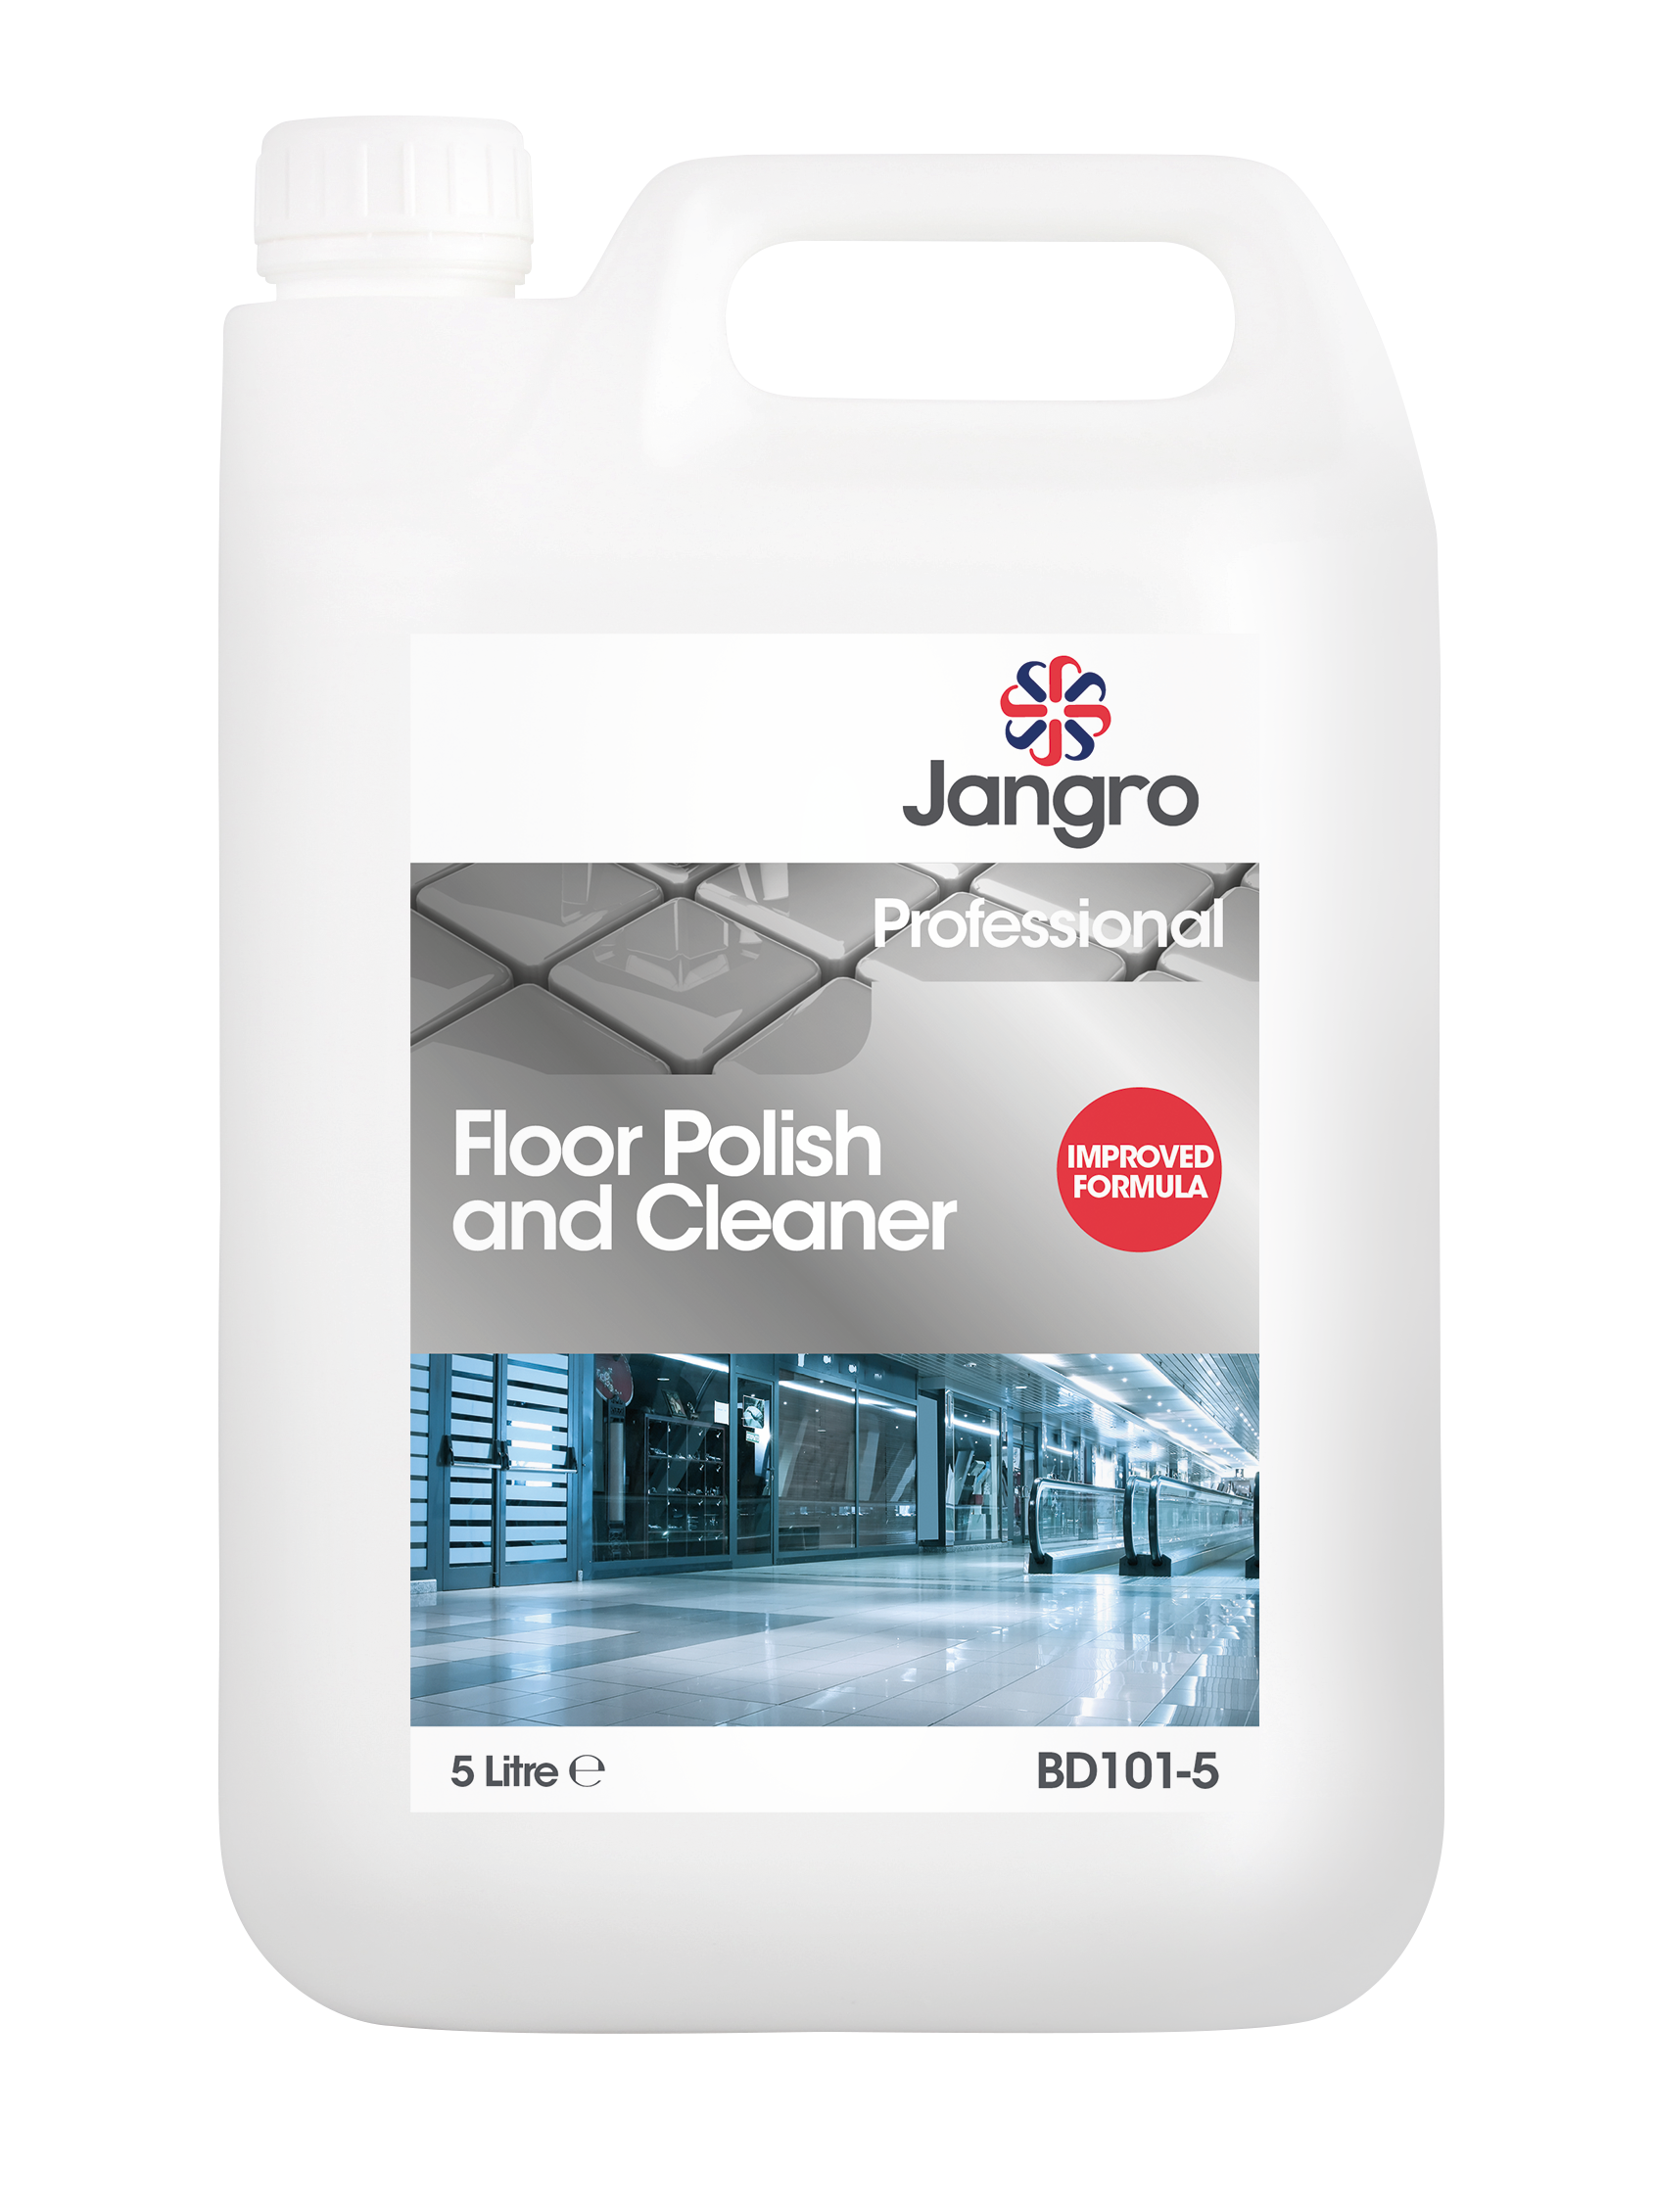 Jangro Floor Polish and Cleaner 5 Litre - BD101-5